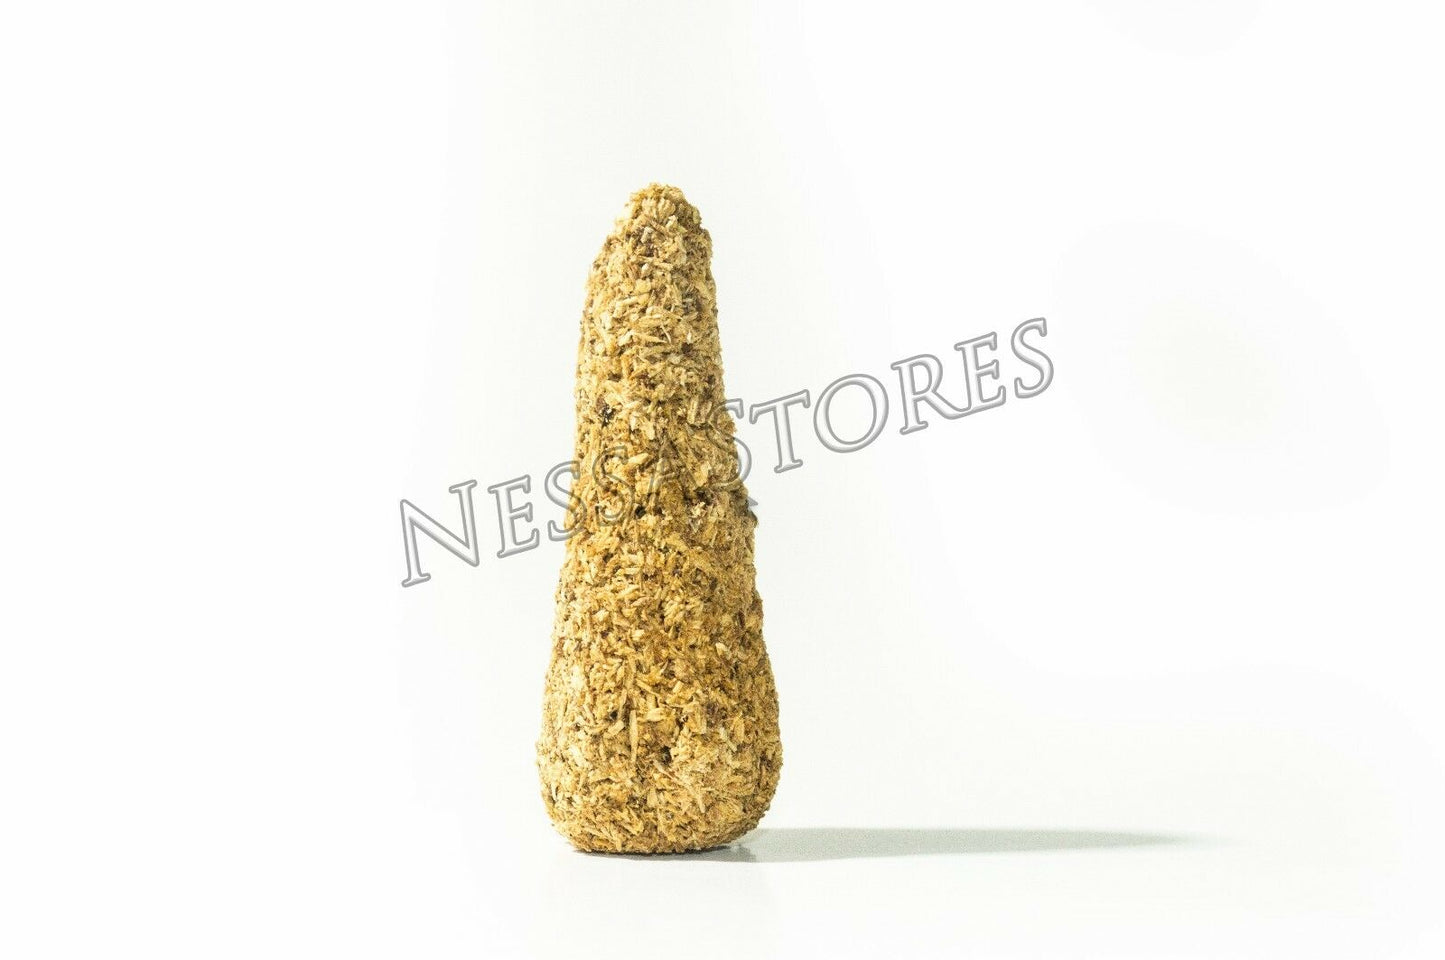 NessaStores Palo Santo Holy Wood Incense Cones 1 1/2" - 2" (30 pcs) #JC-063